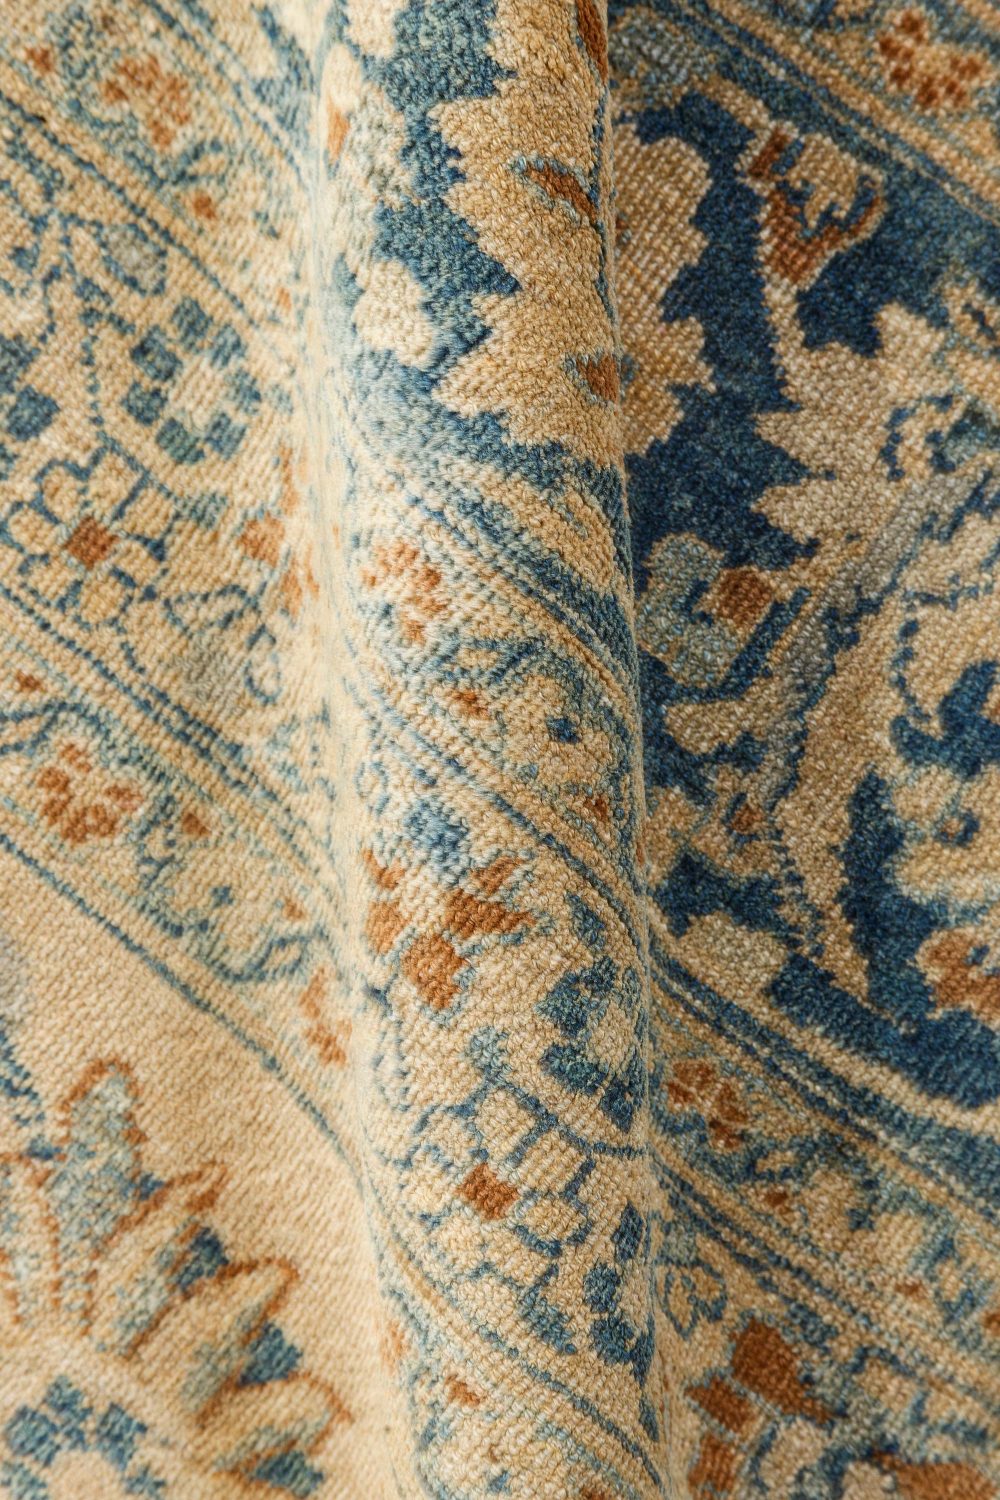 Authentic 1900s Persian Kirman Handmade Wool Rug BB7255